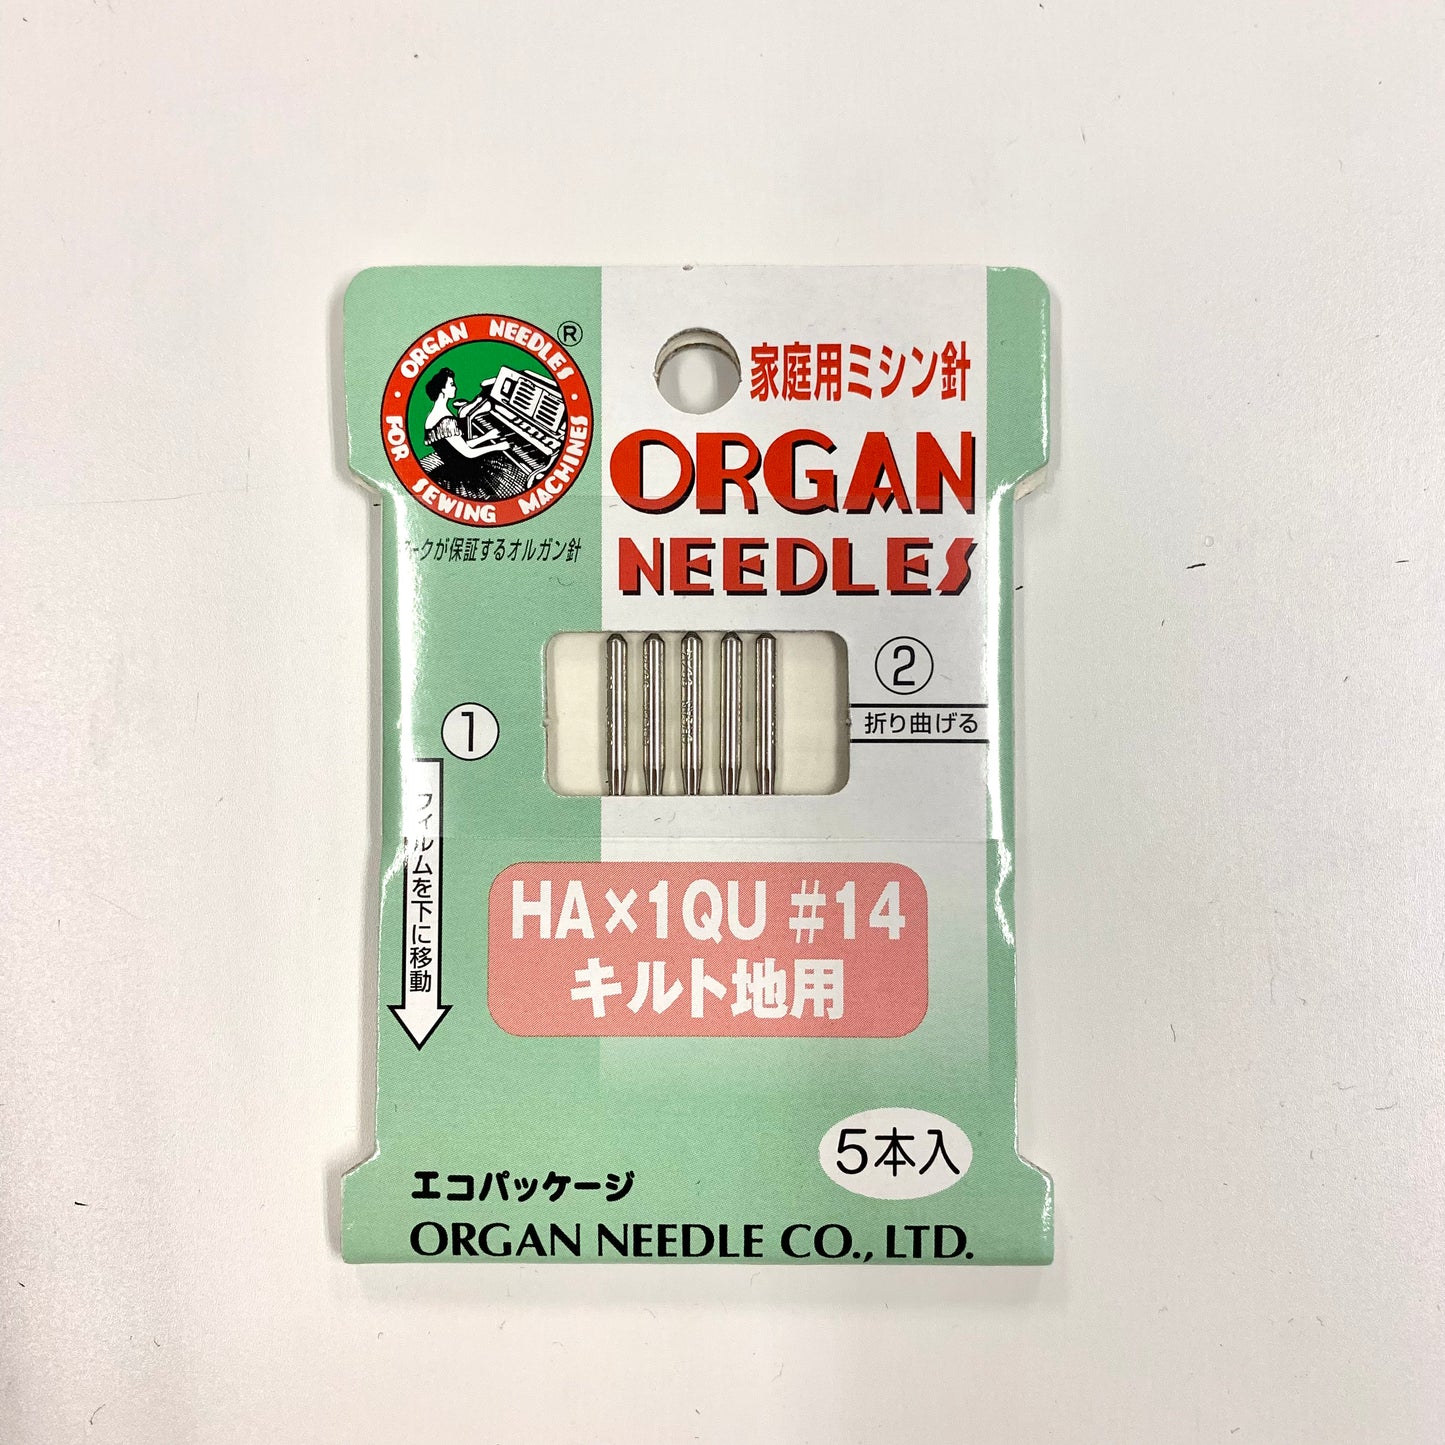 Japan | Organ Domestic Sewing Machine Needles HAx1QU - quilting fabric 風琴牌家用縫紉機衣車車針 HAx1QU 絎縫布料用